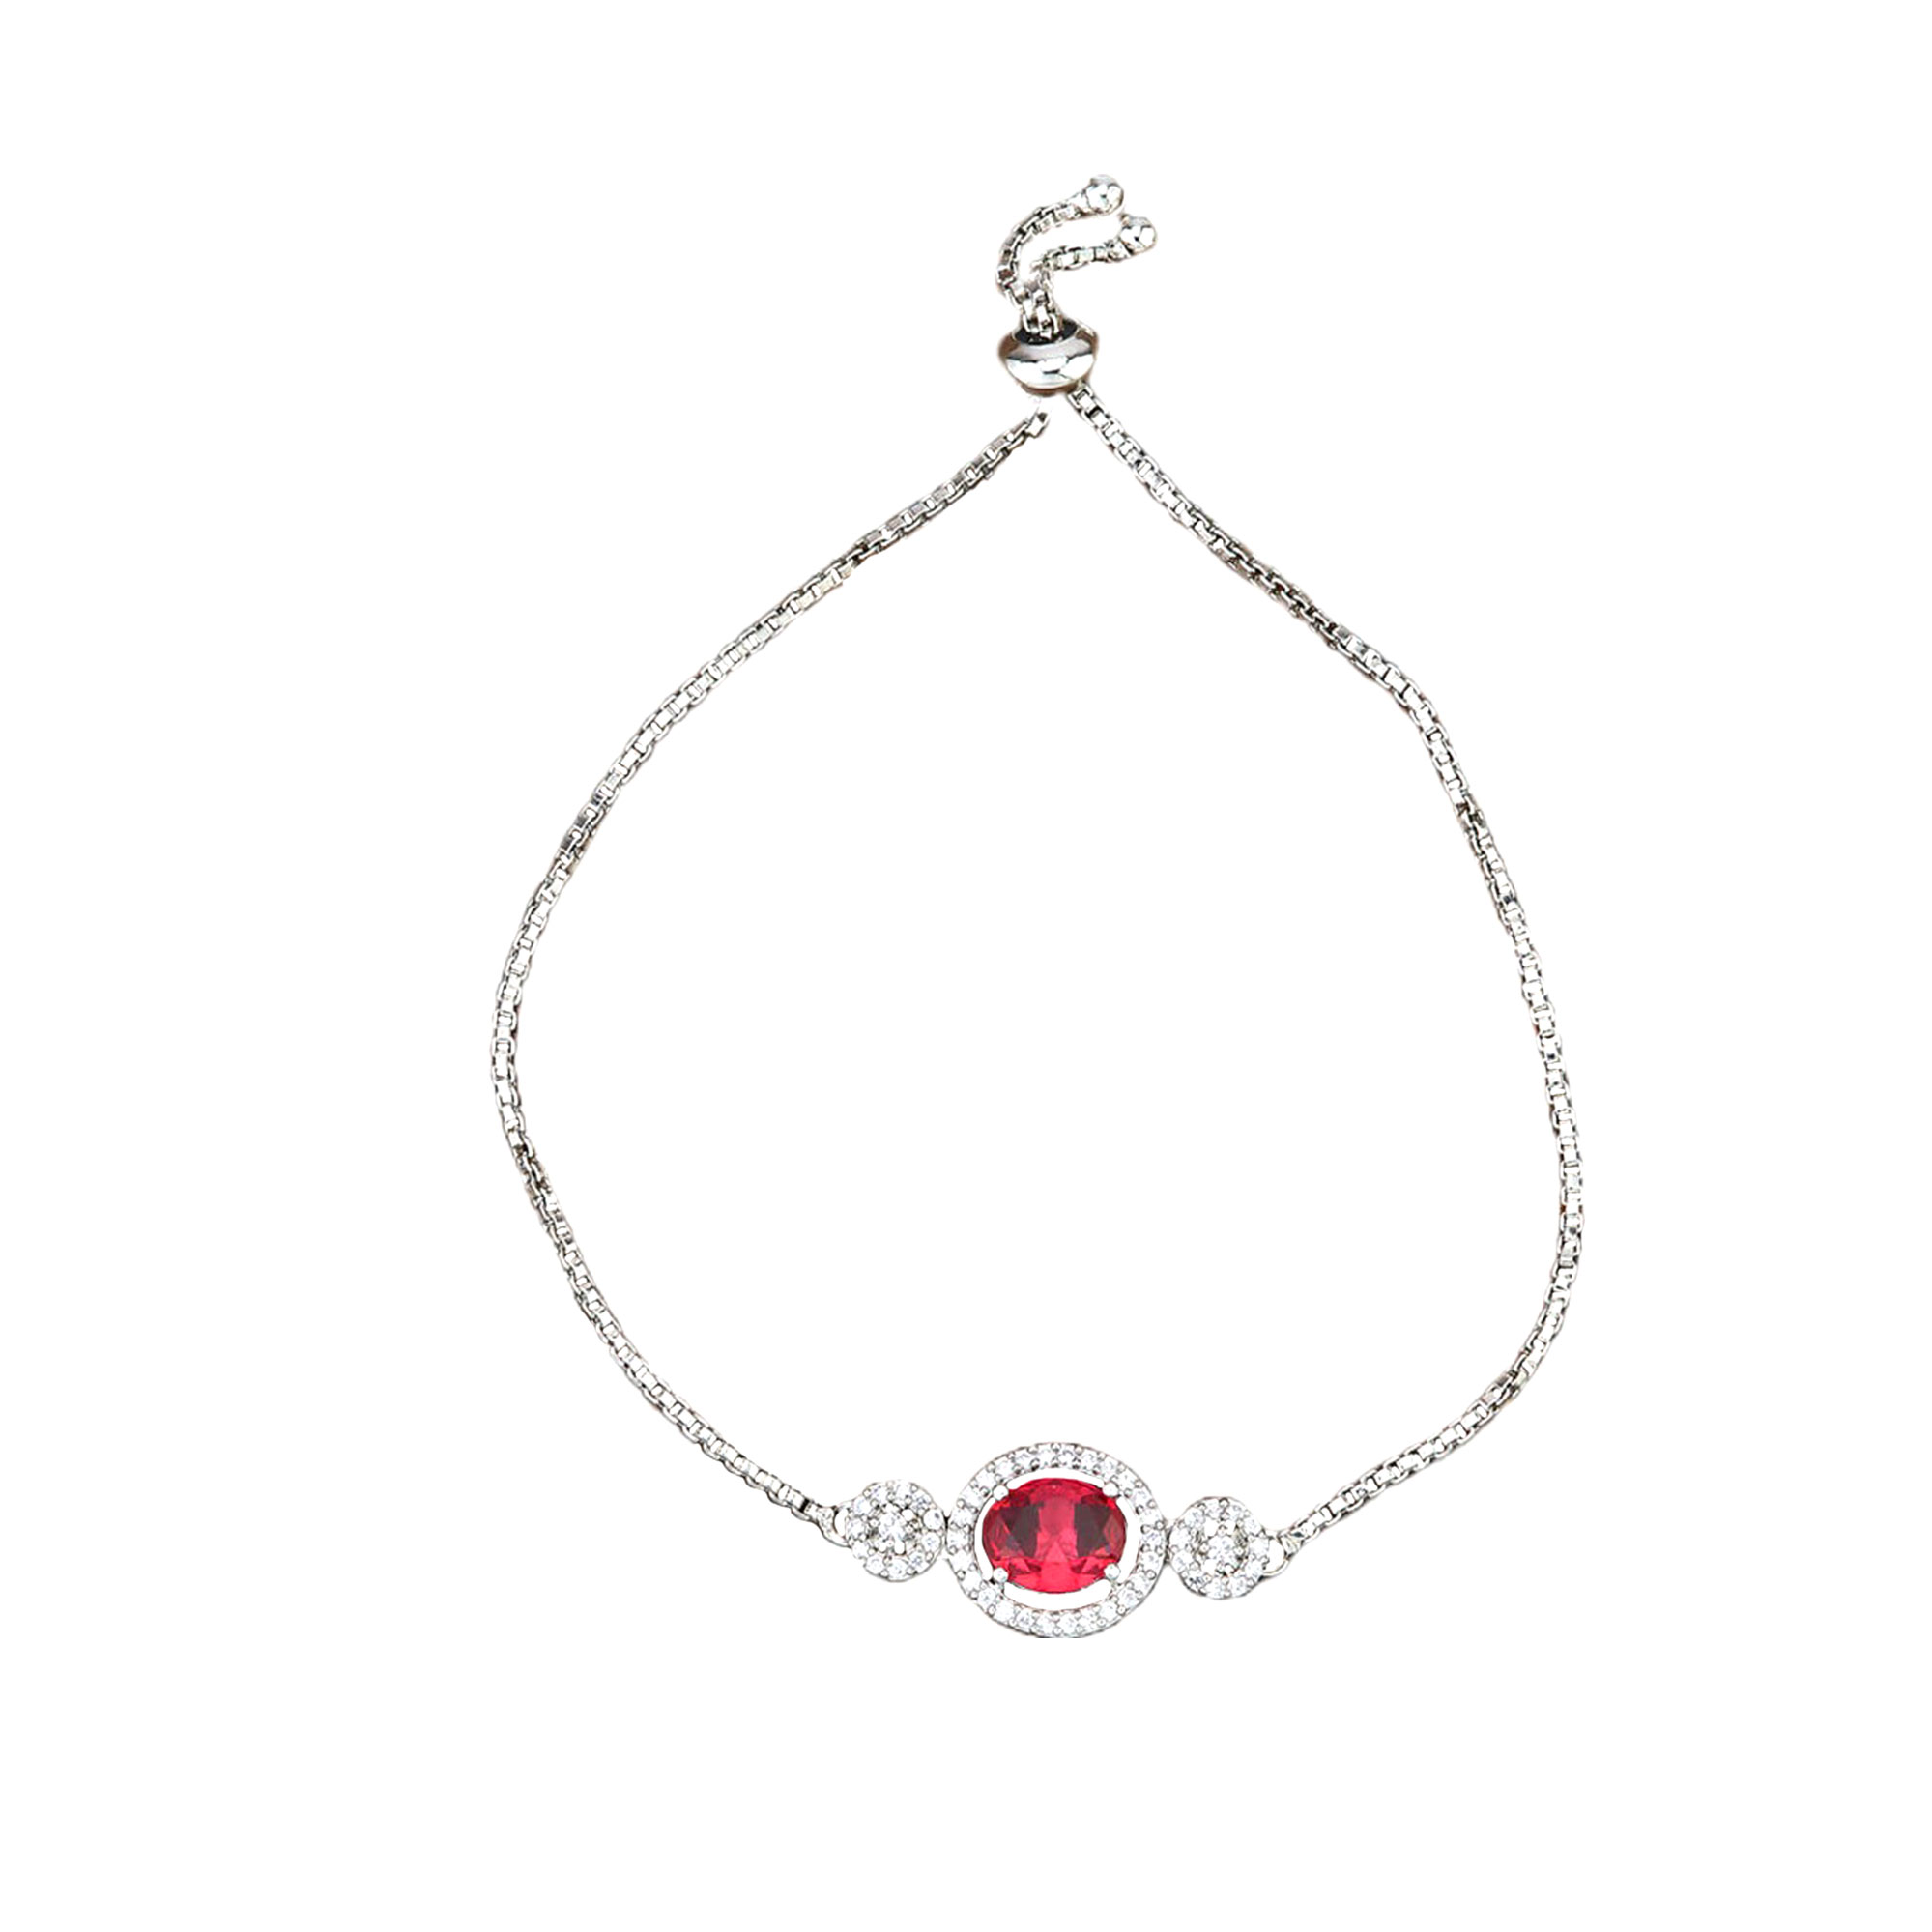 Peruvian PINK OPAL Crystal Bracelet, Chip Beads - Beaded Handmade Jewelry,  E0642 | eBay